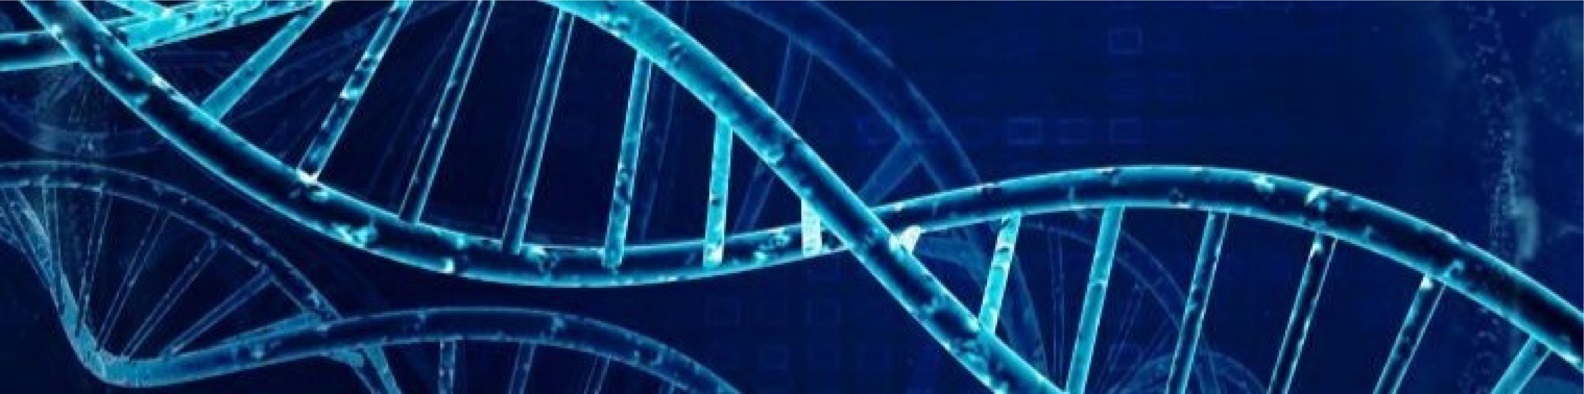 DNA Double Helix Linkedin Background